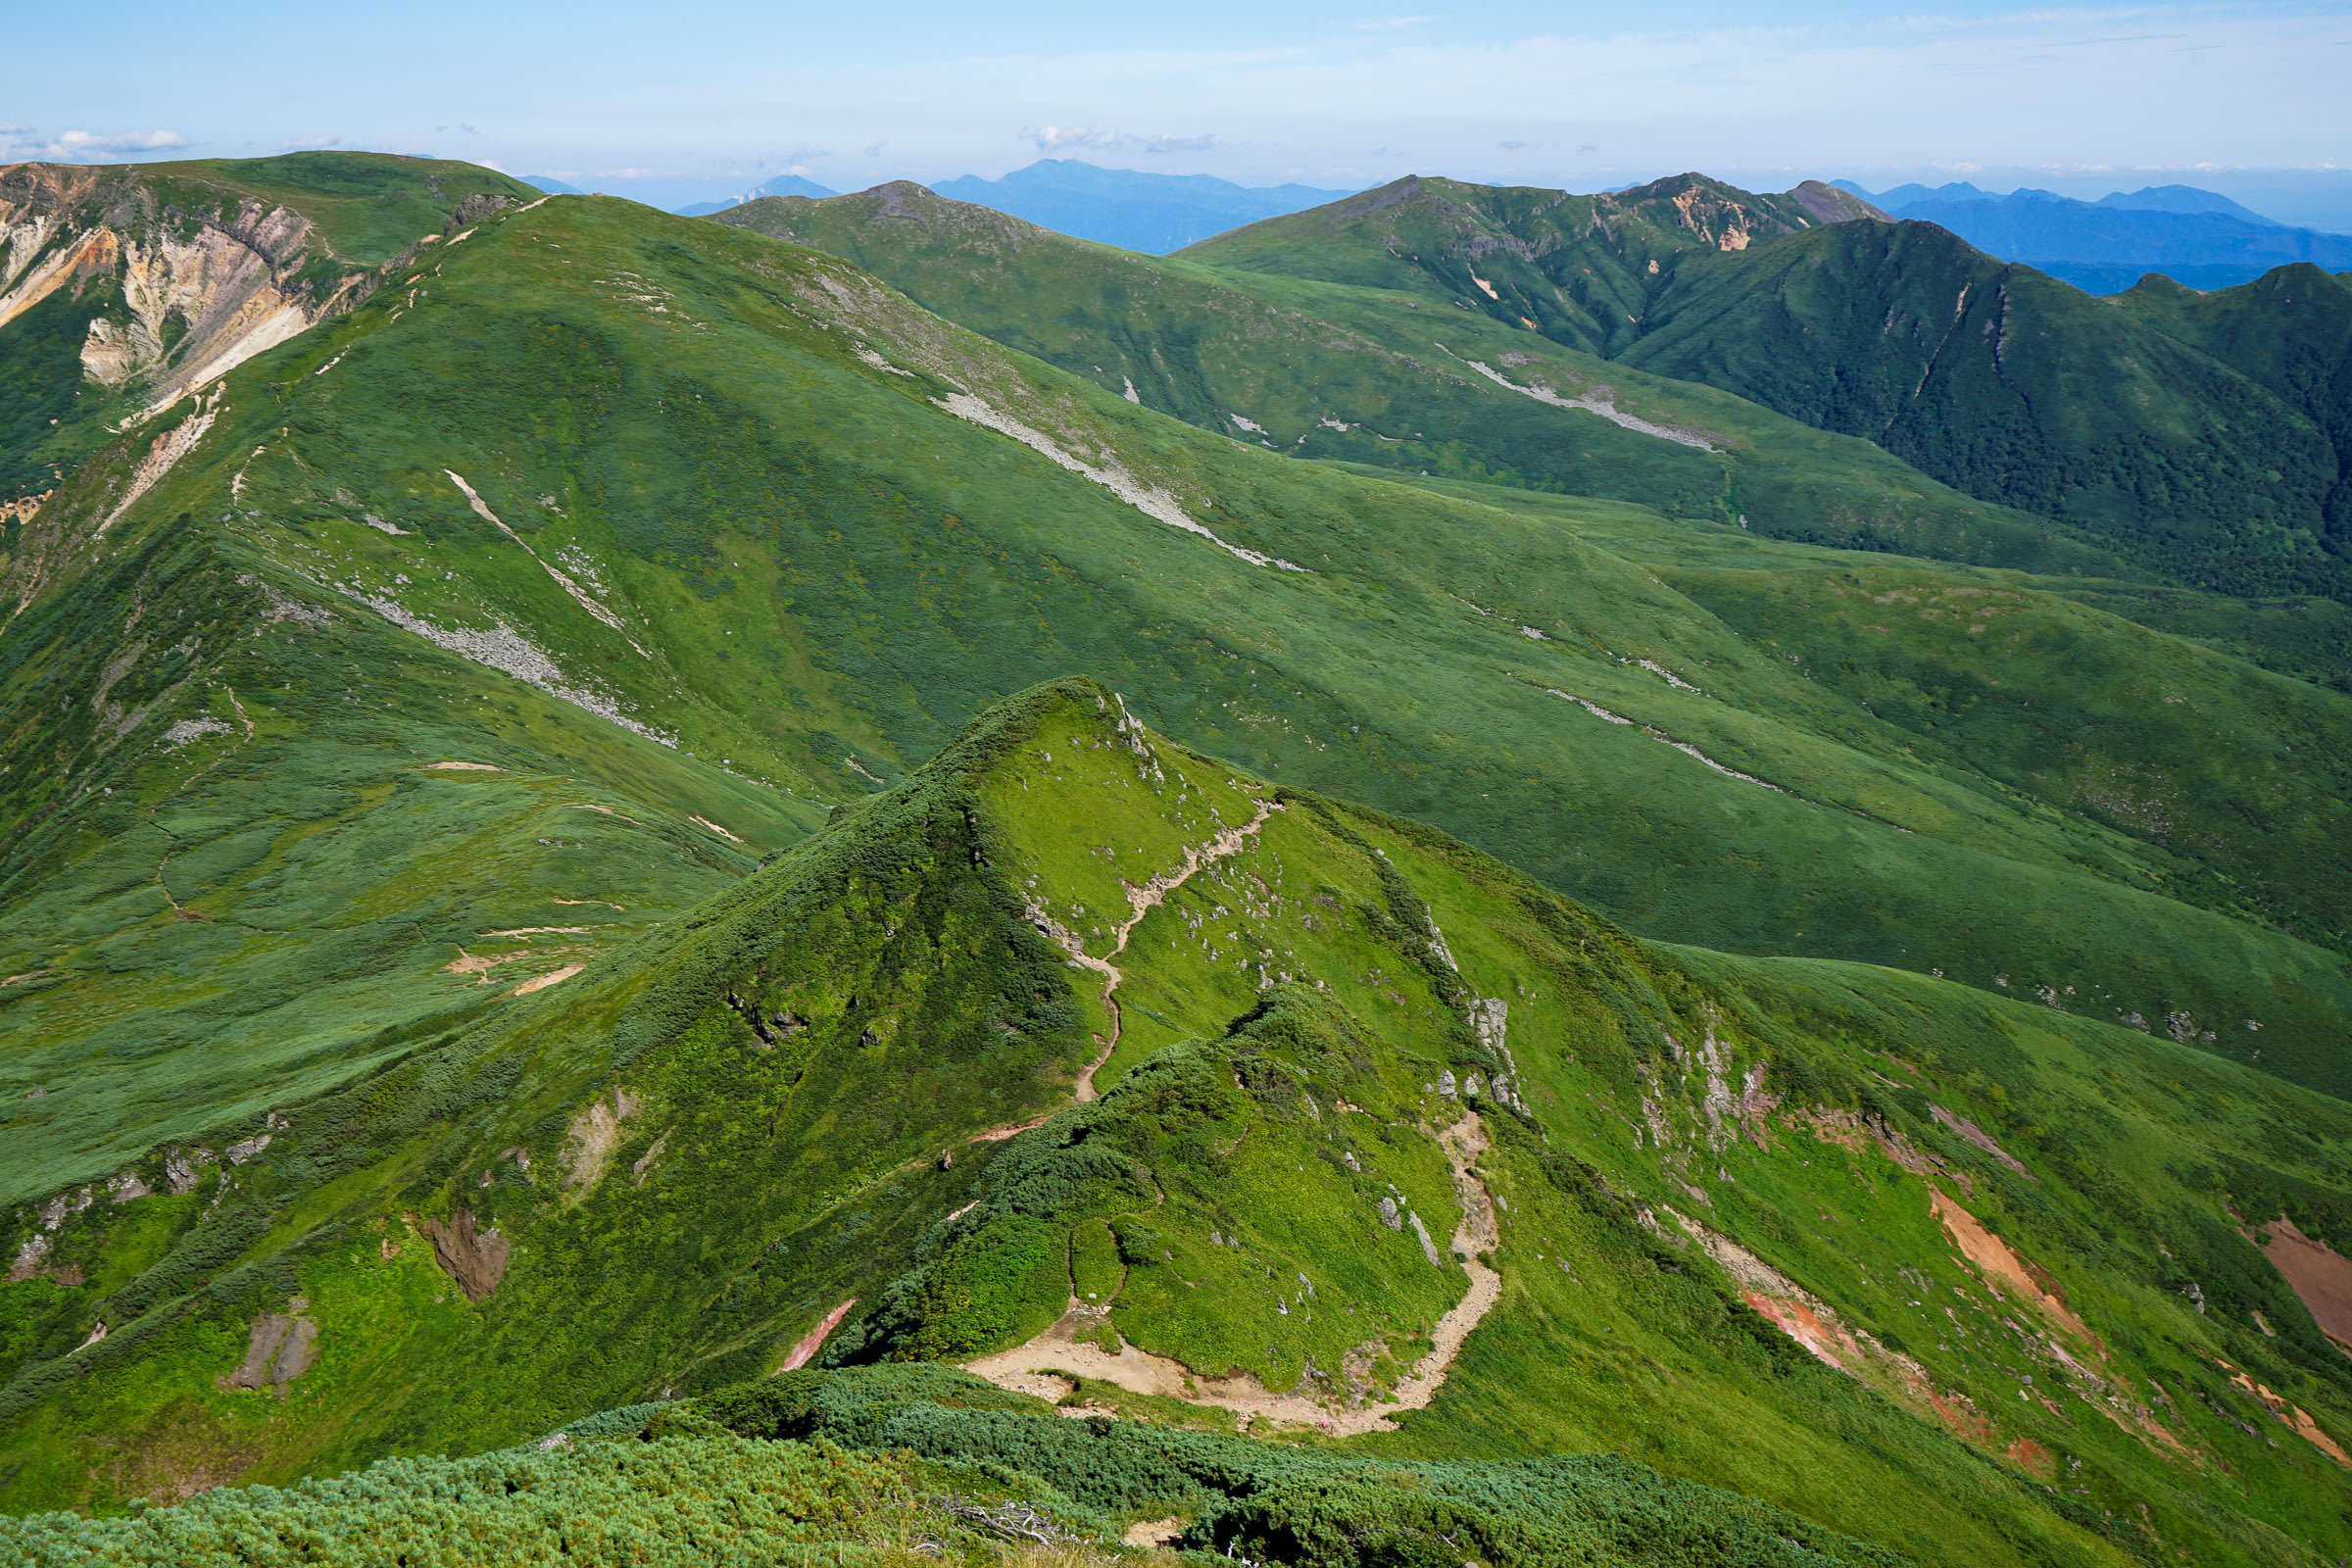 Hiking trails wind away across Mt. Furano.